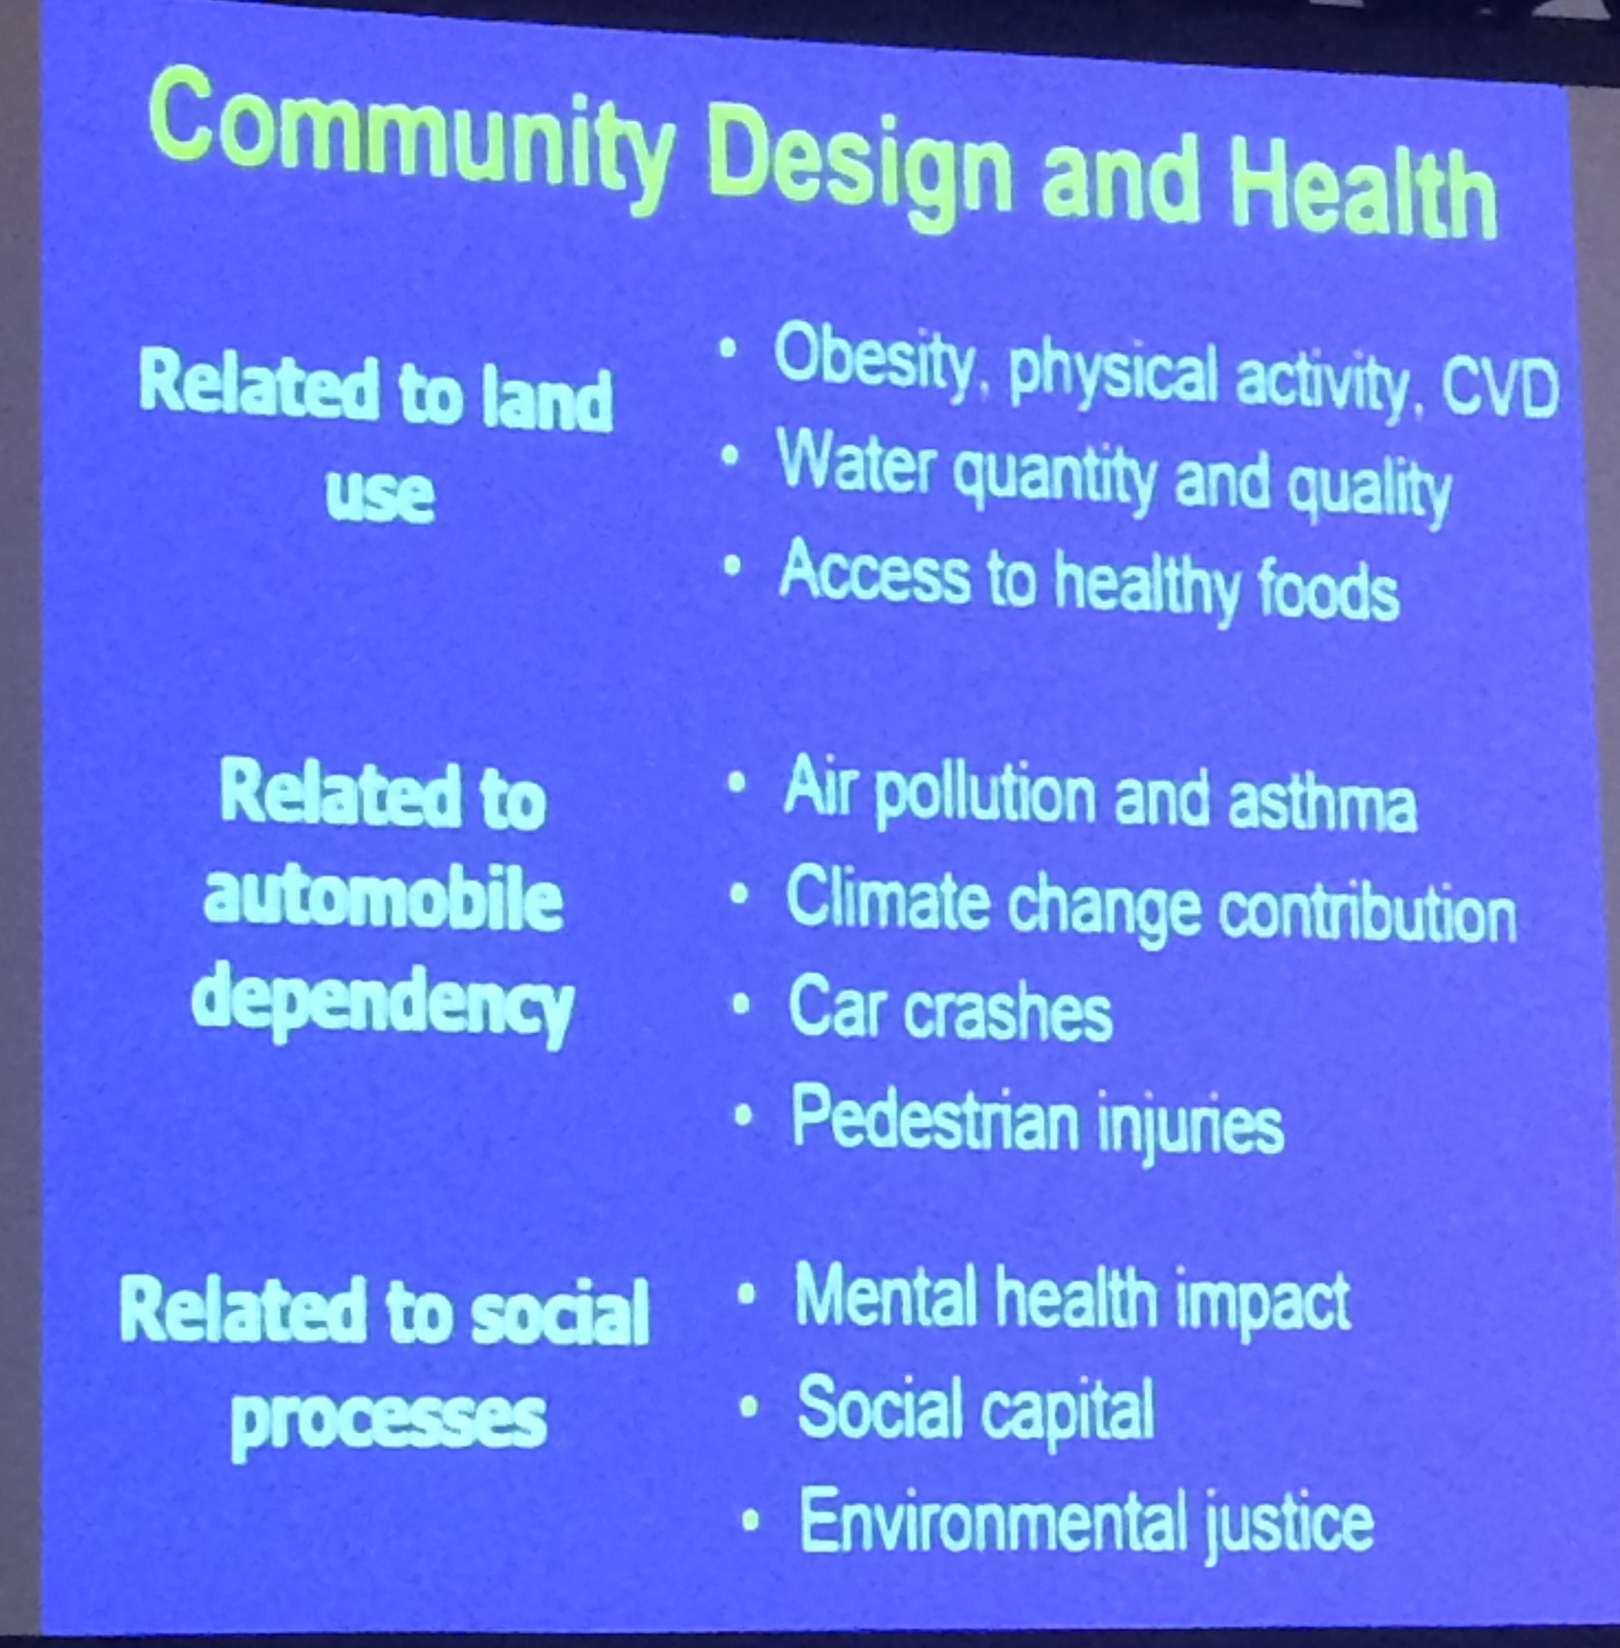 Andrew Dannenberg's slide addressing the built environment and health.